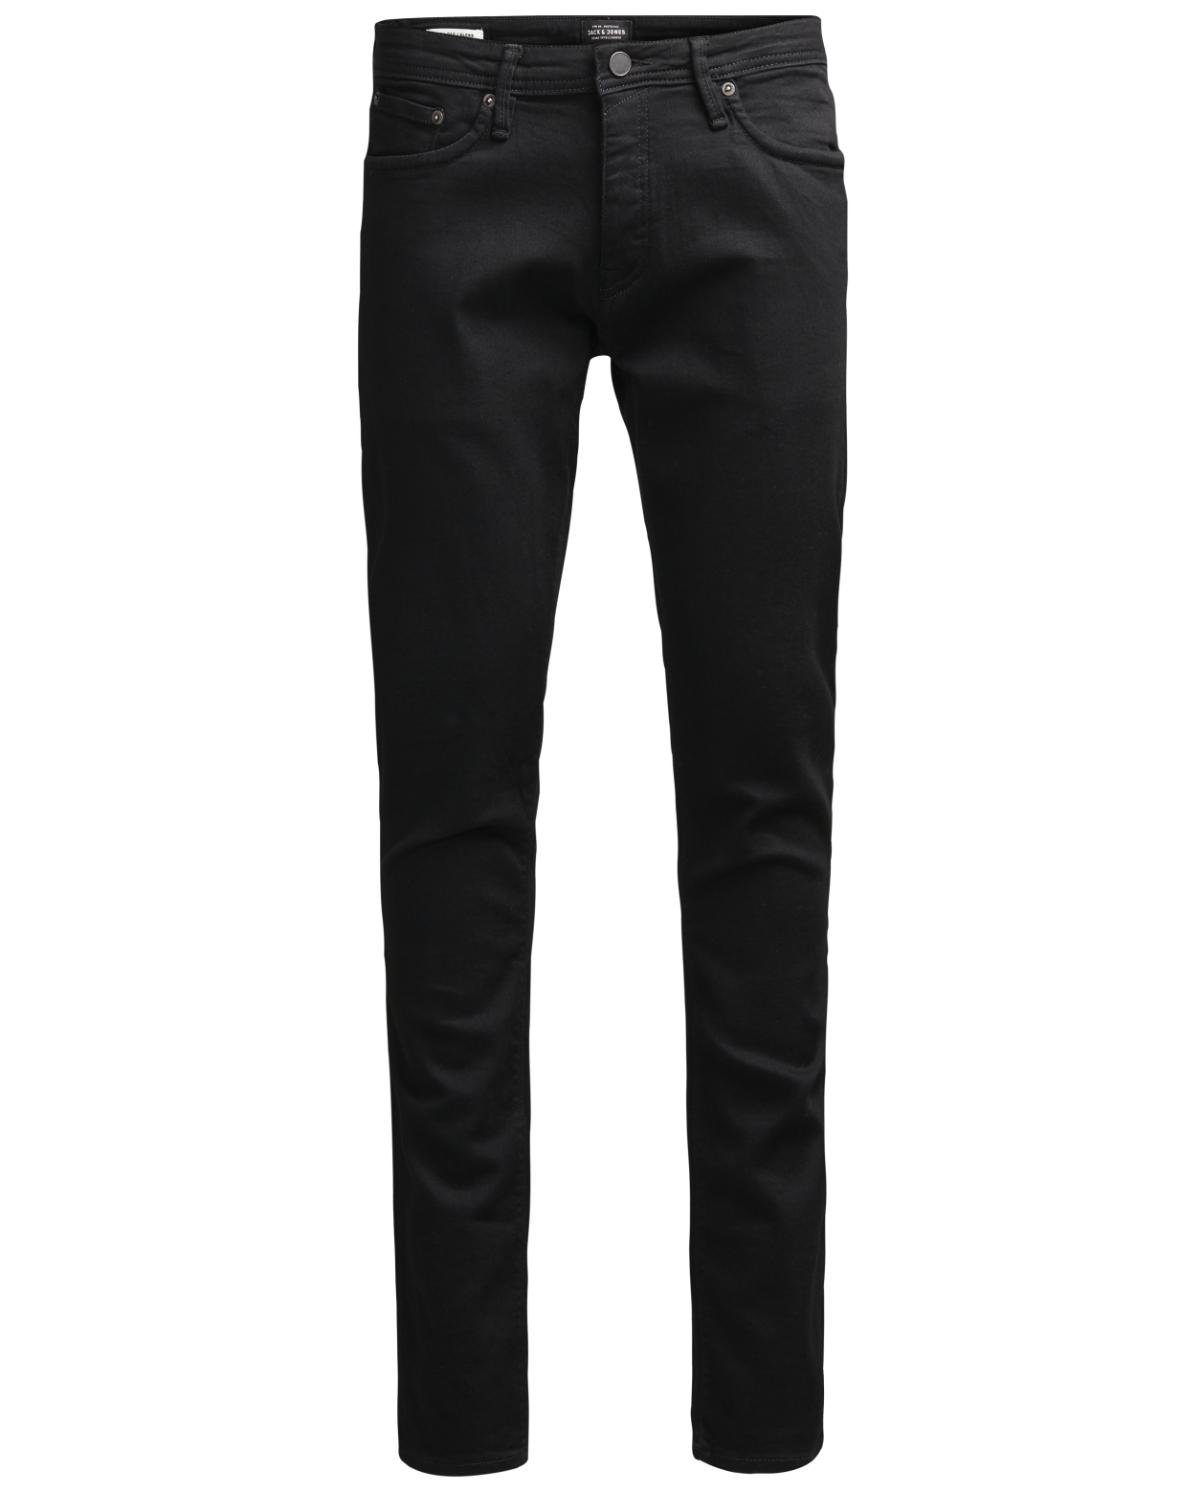 Schwarze Jack & Jones Jeans online kaufen | OTTO